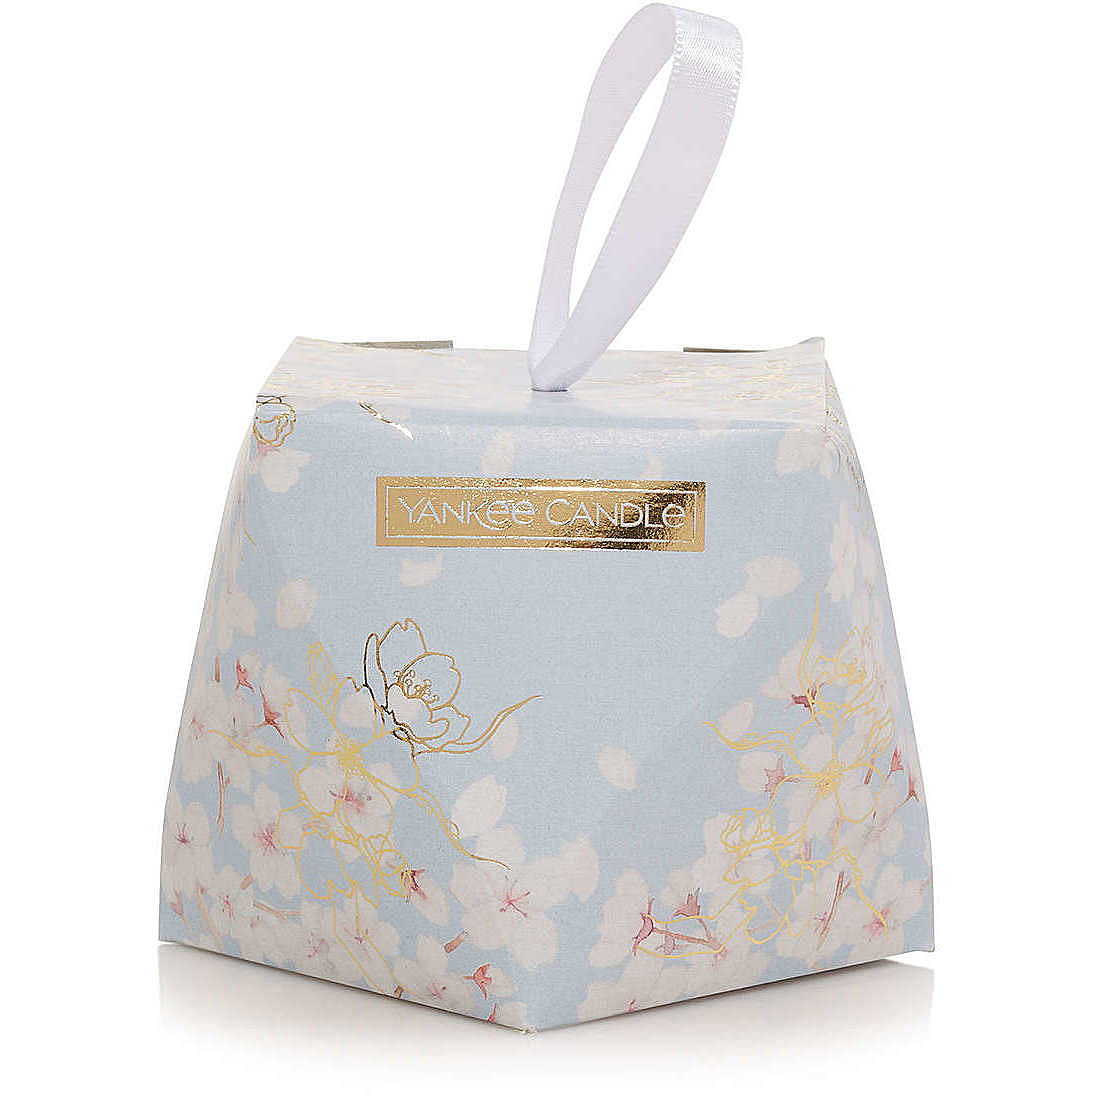 Candela Yankee Candle Box Regalo Sakura Blossom colore Bianco 1632258E